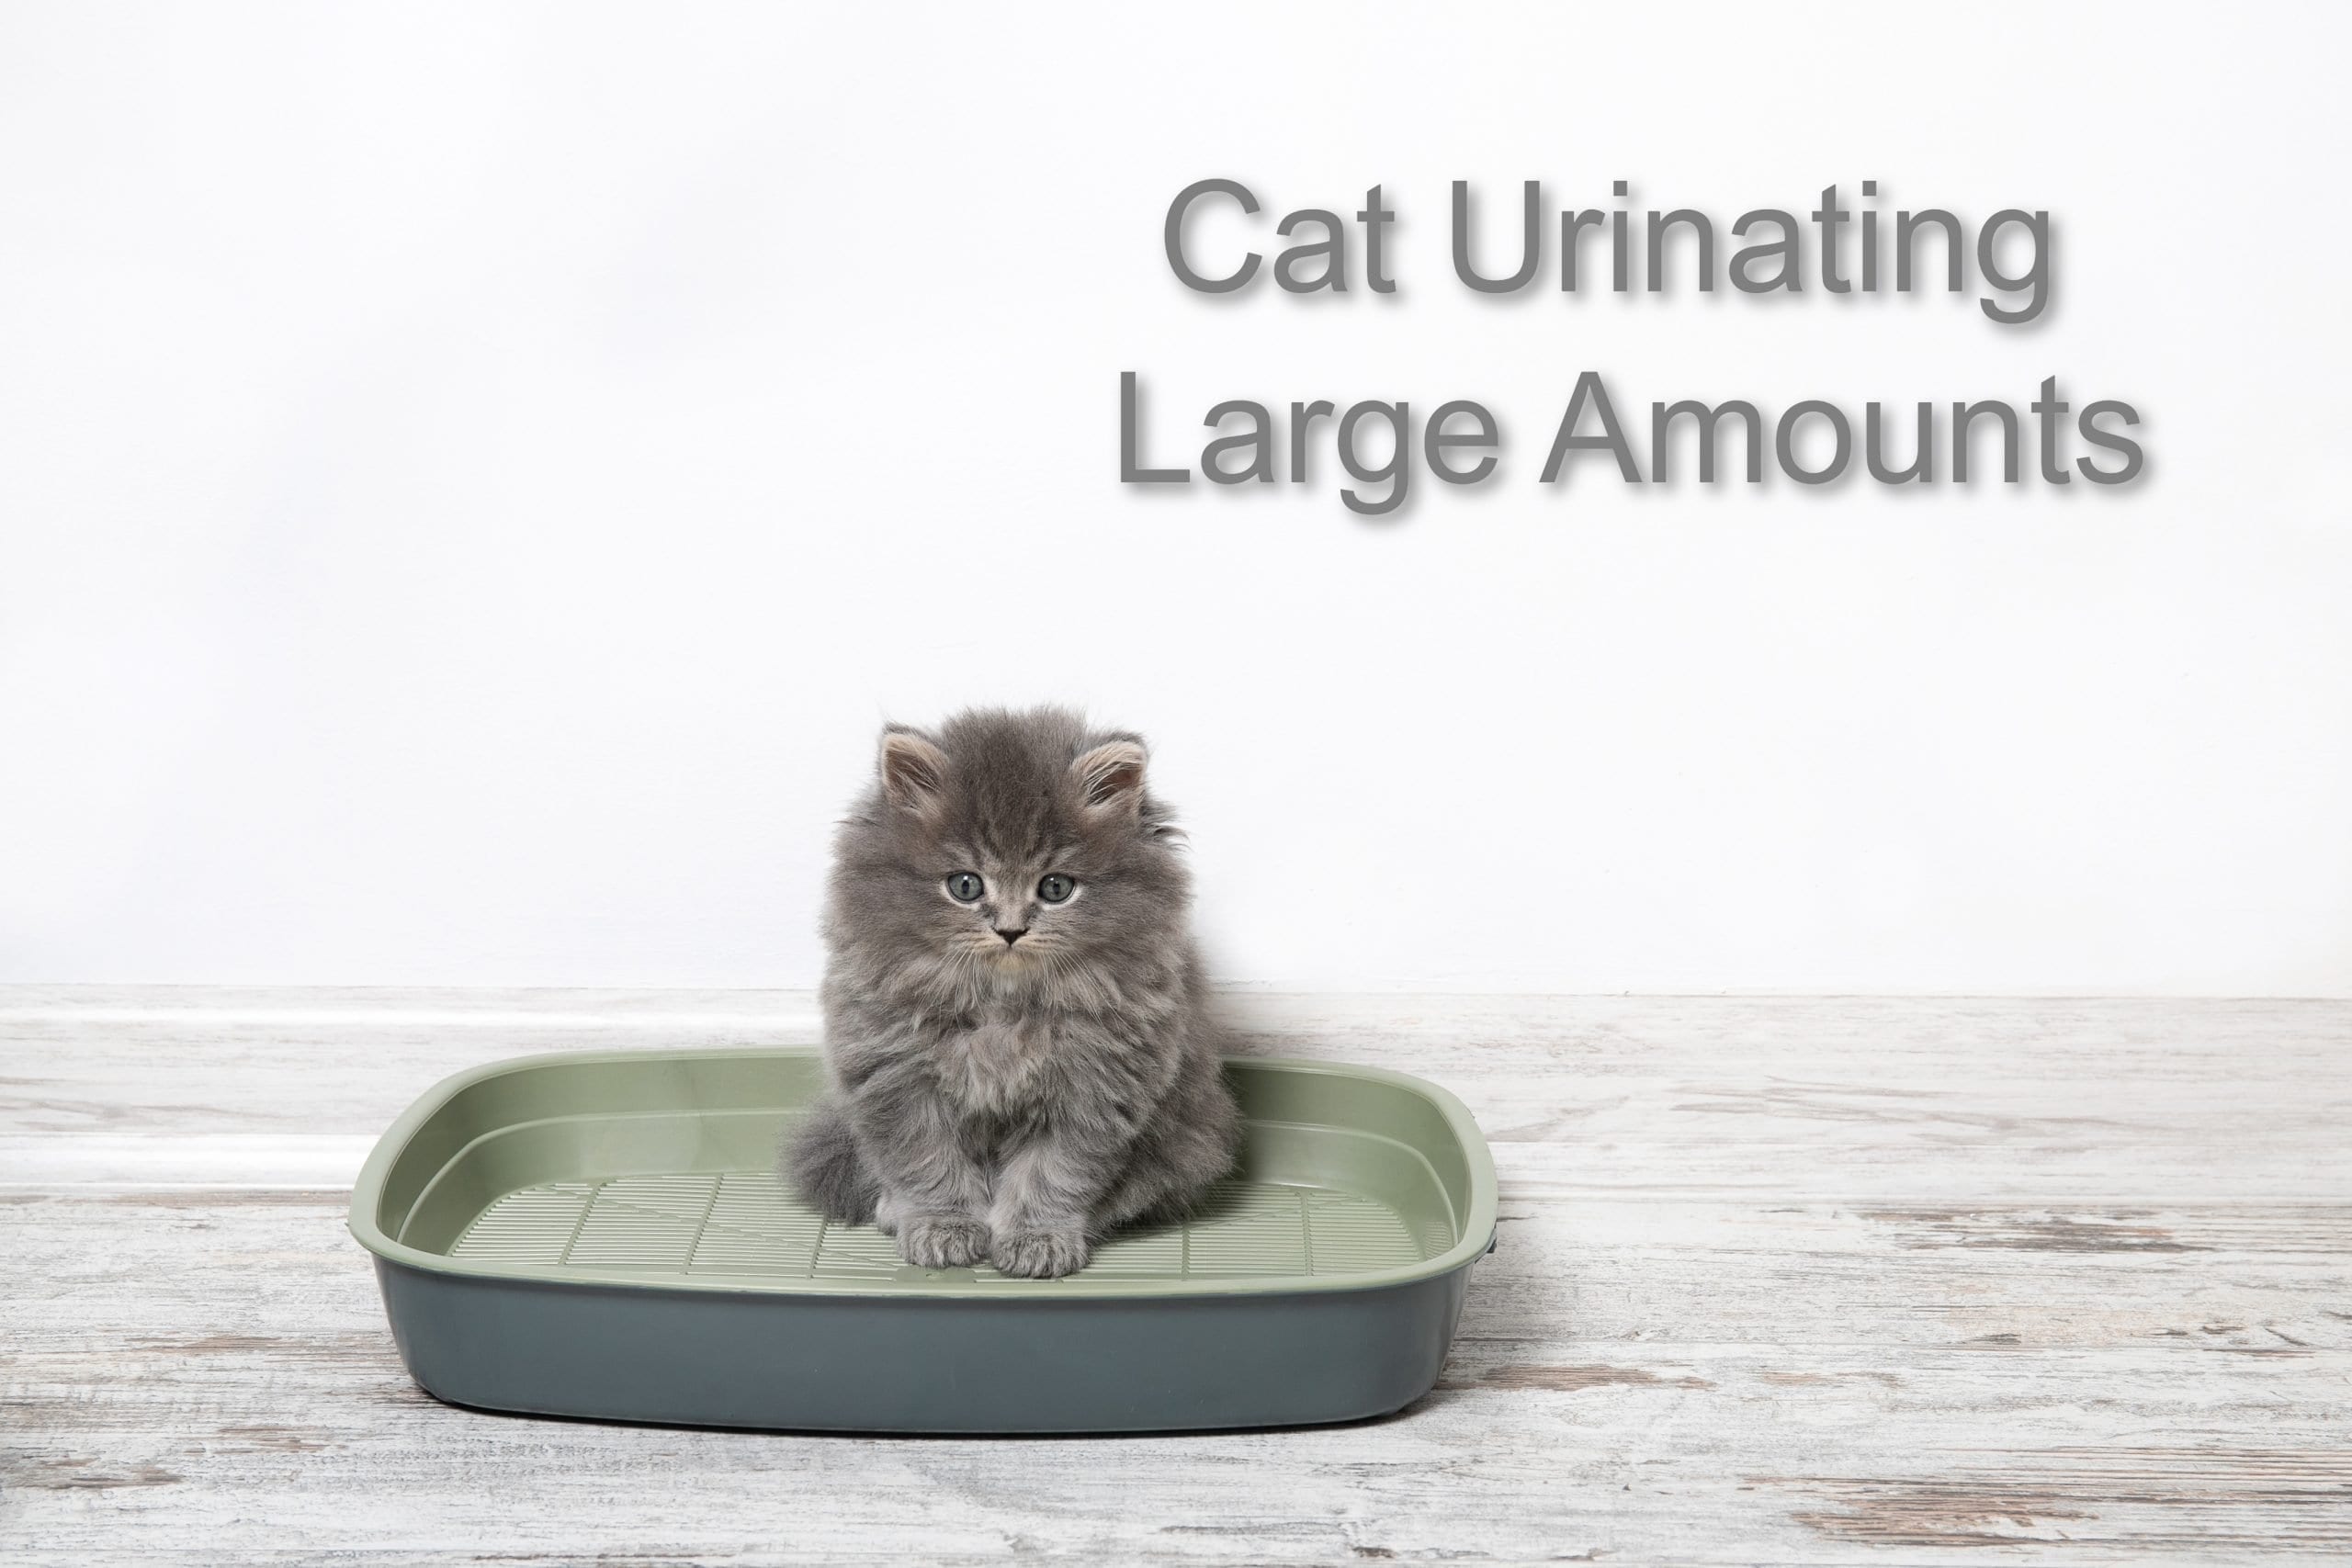 Cat Urinating Large Amounts